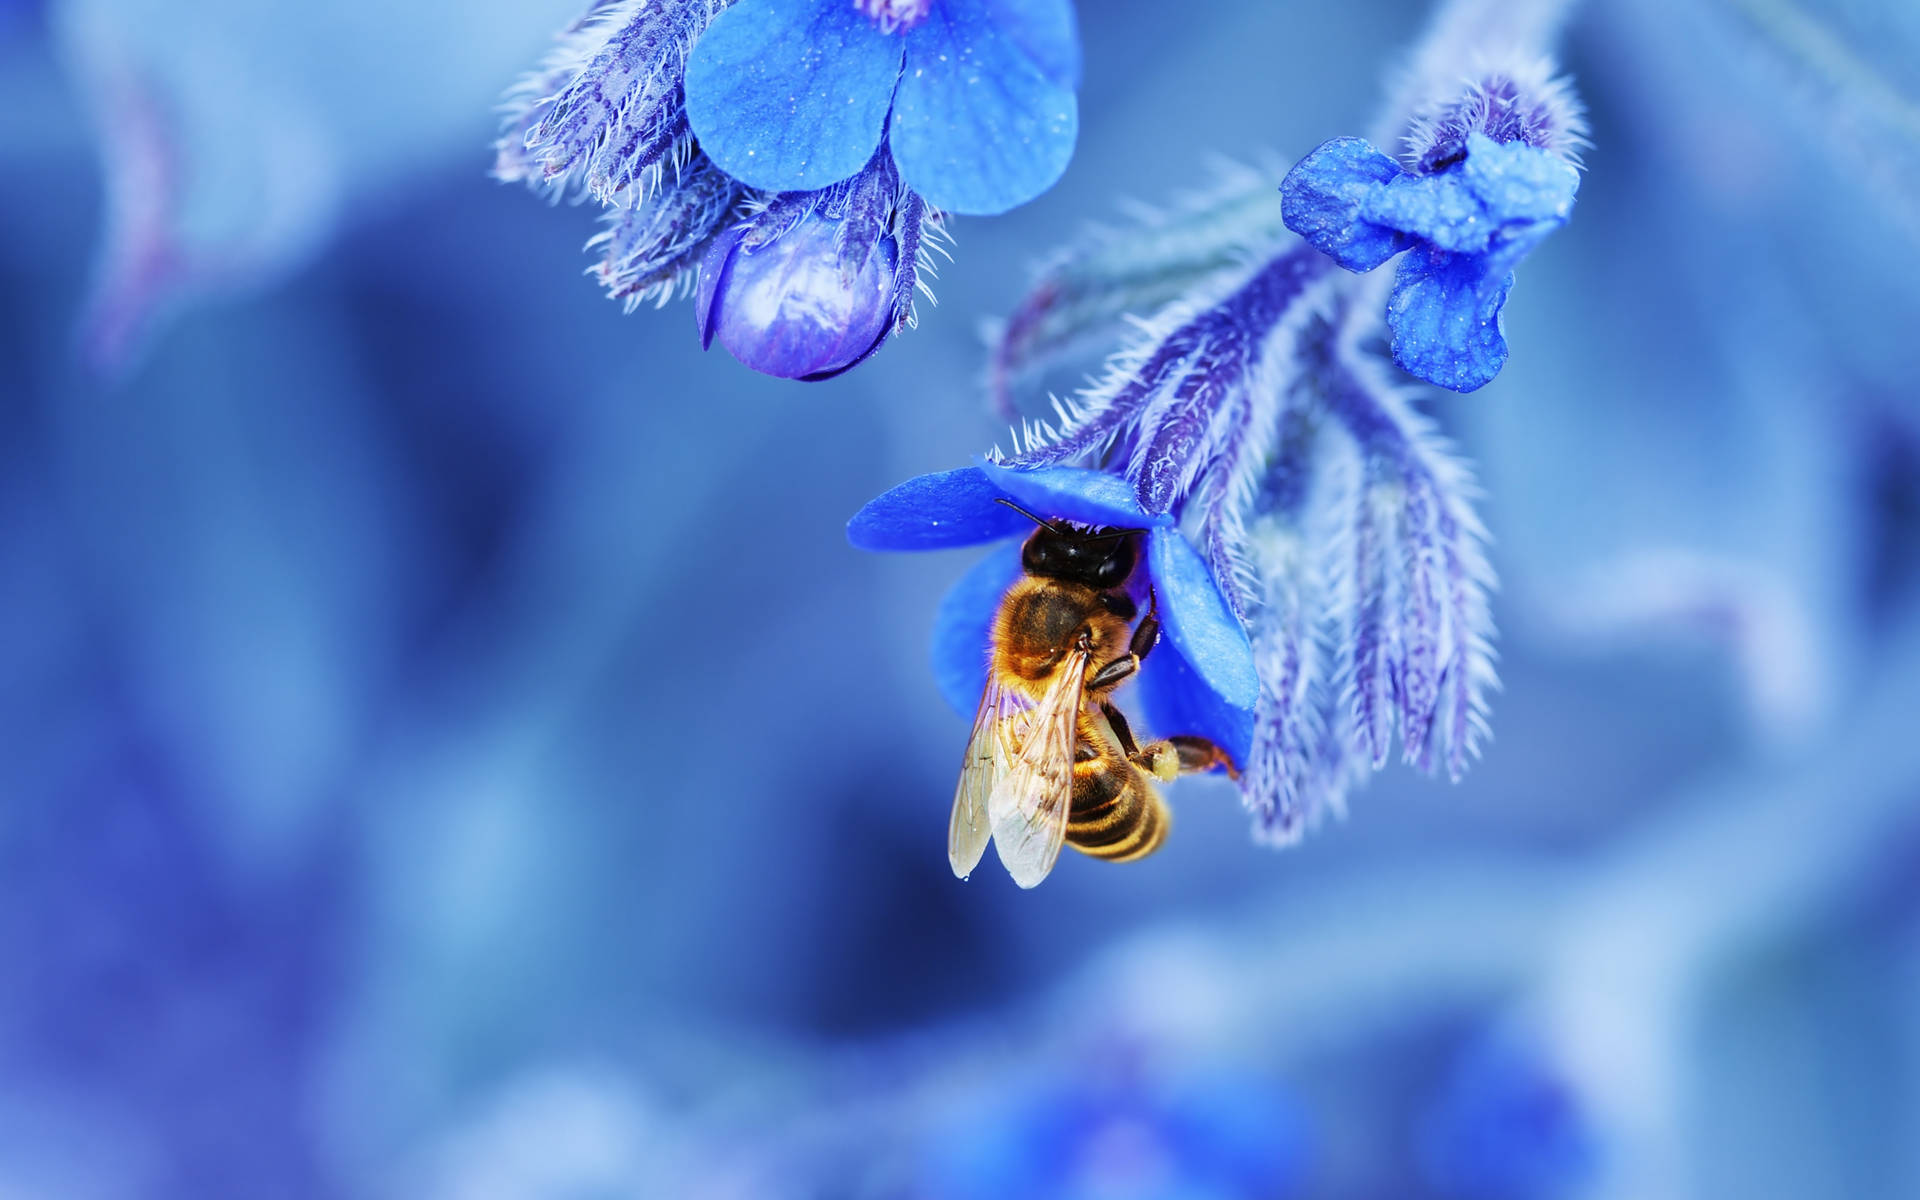 Bee On A Blue Flower